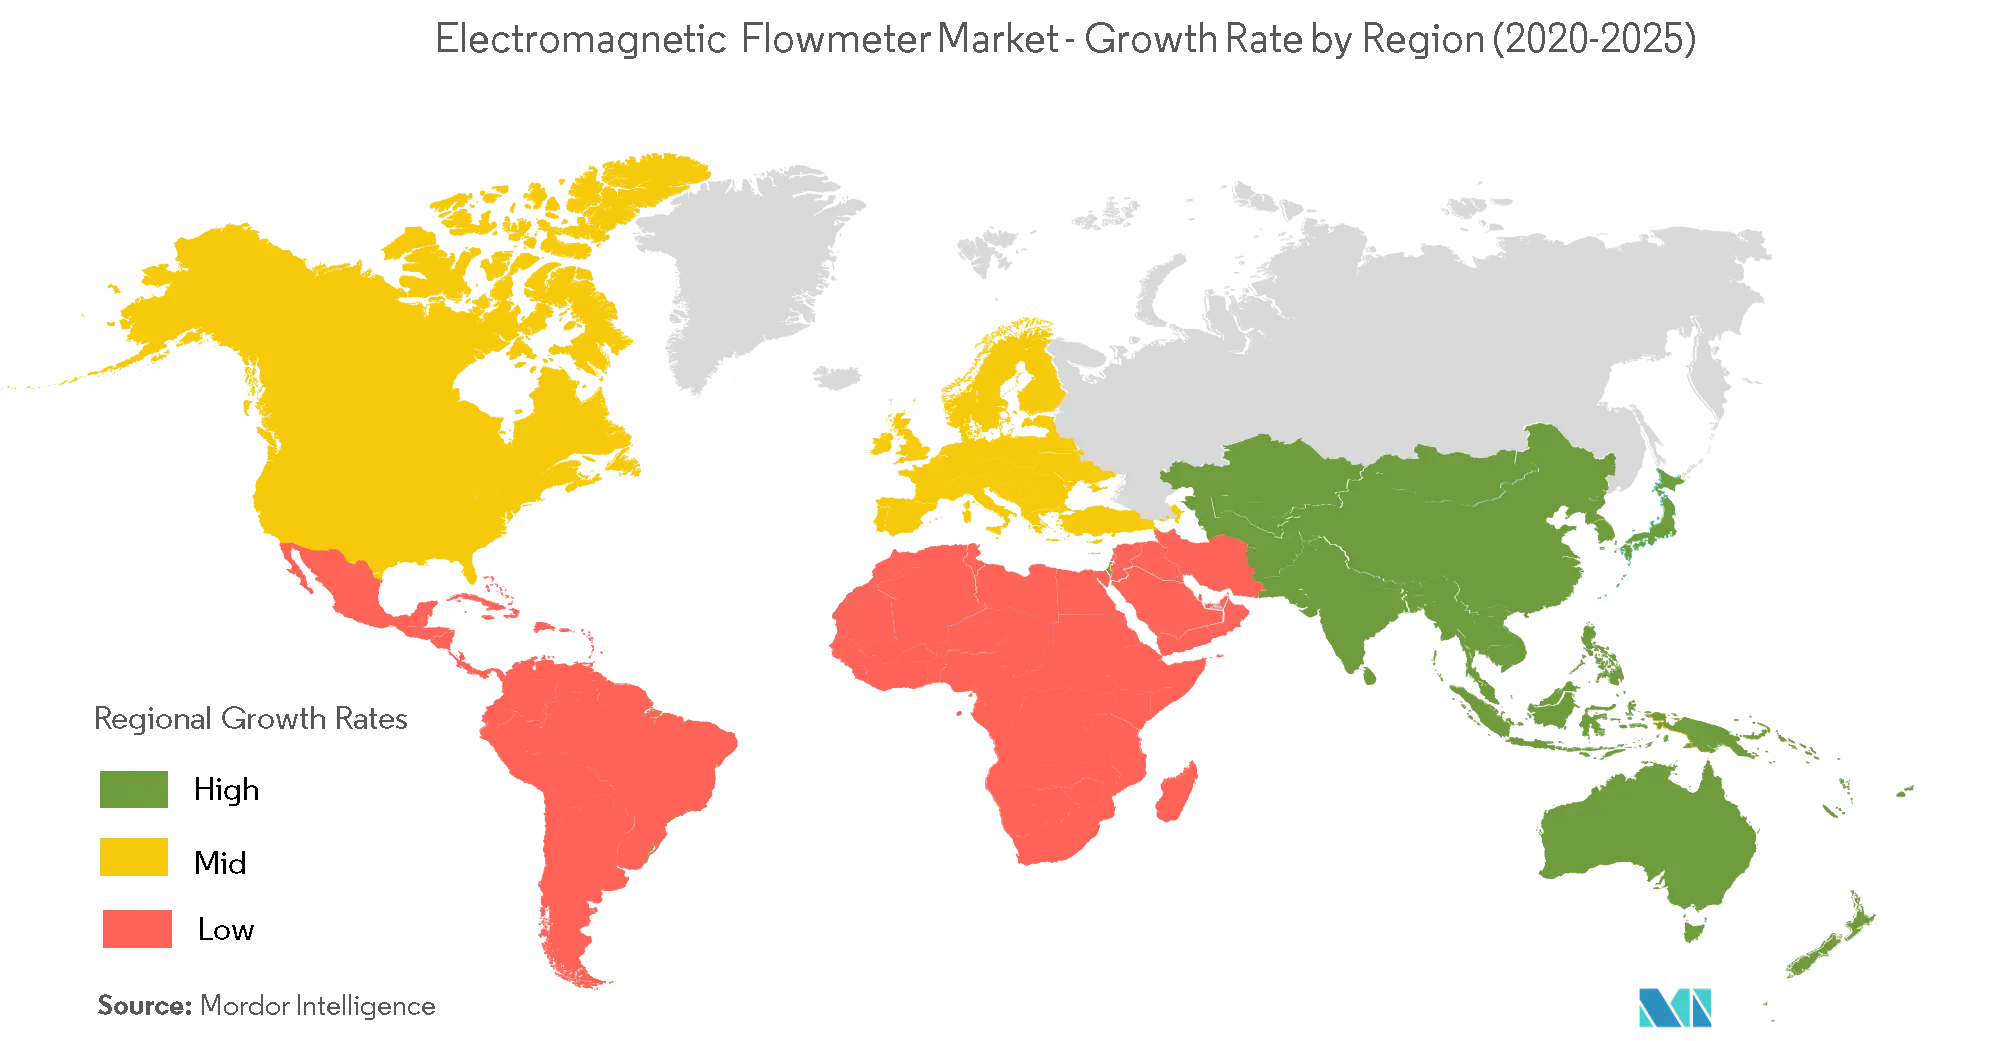 Electromagnetic Flowmeter Market Growth